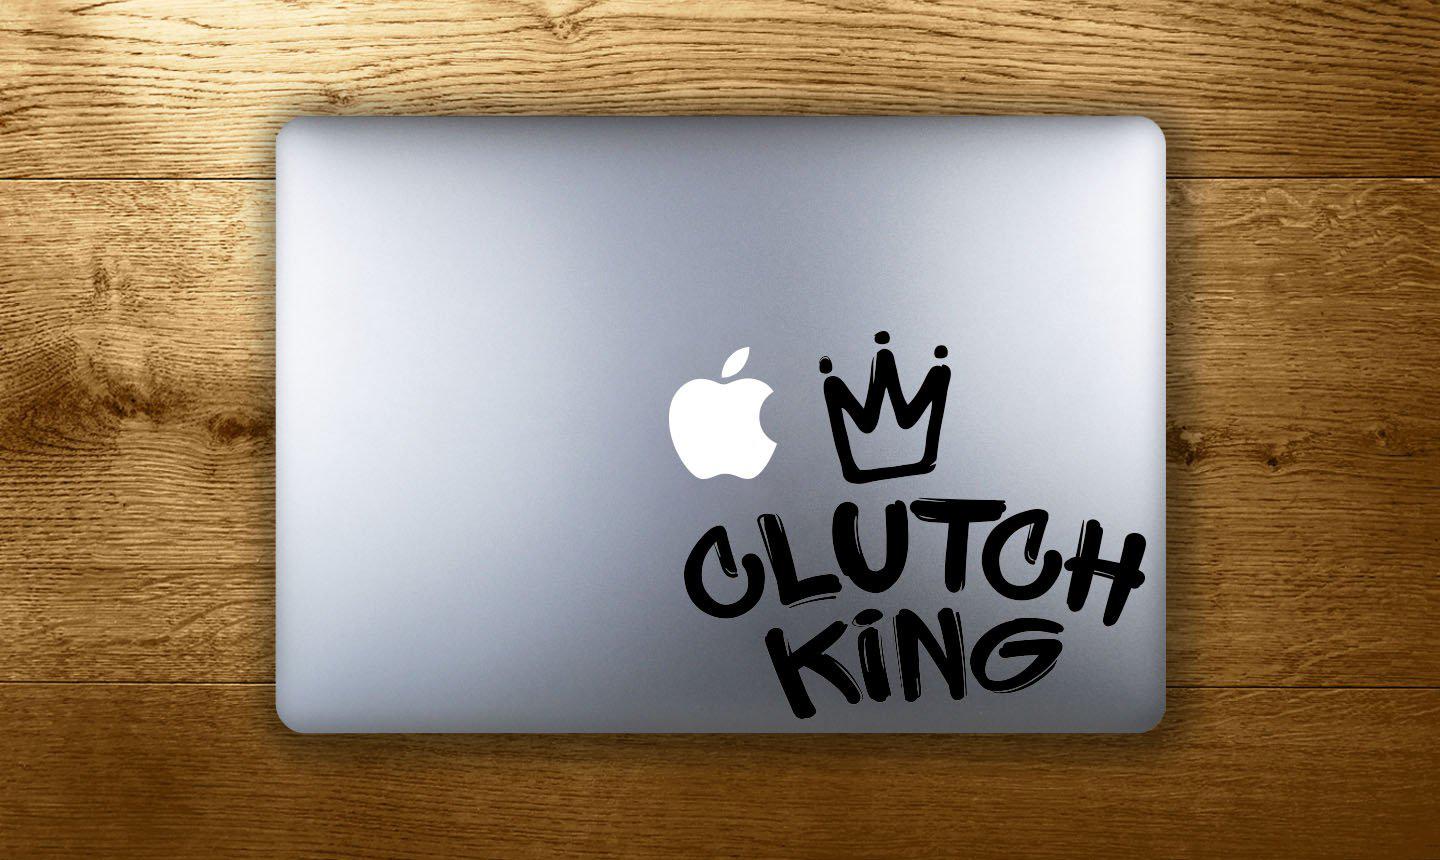 Clutch King - make it stick